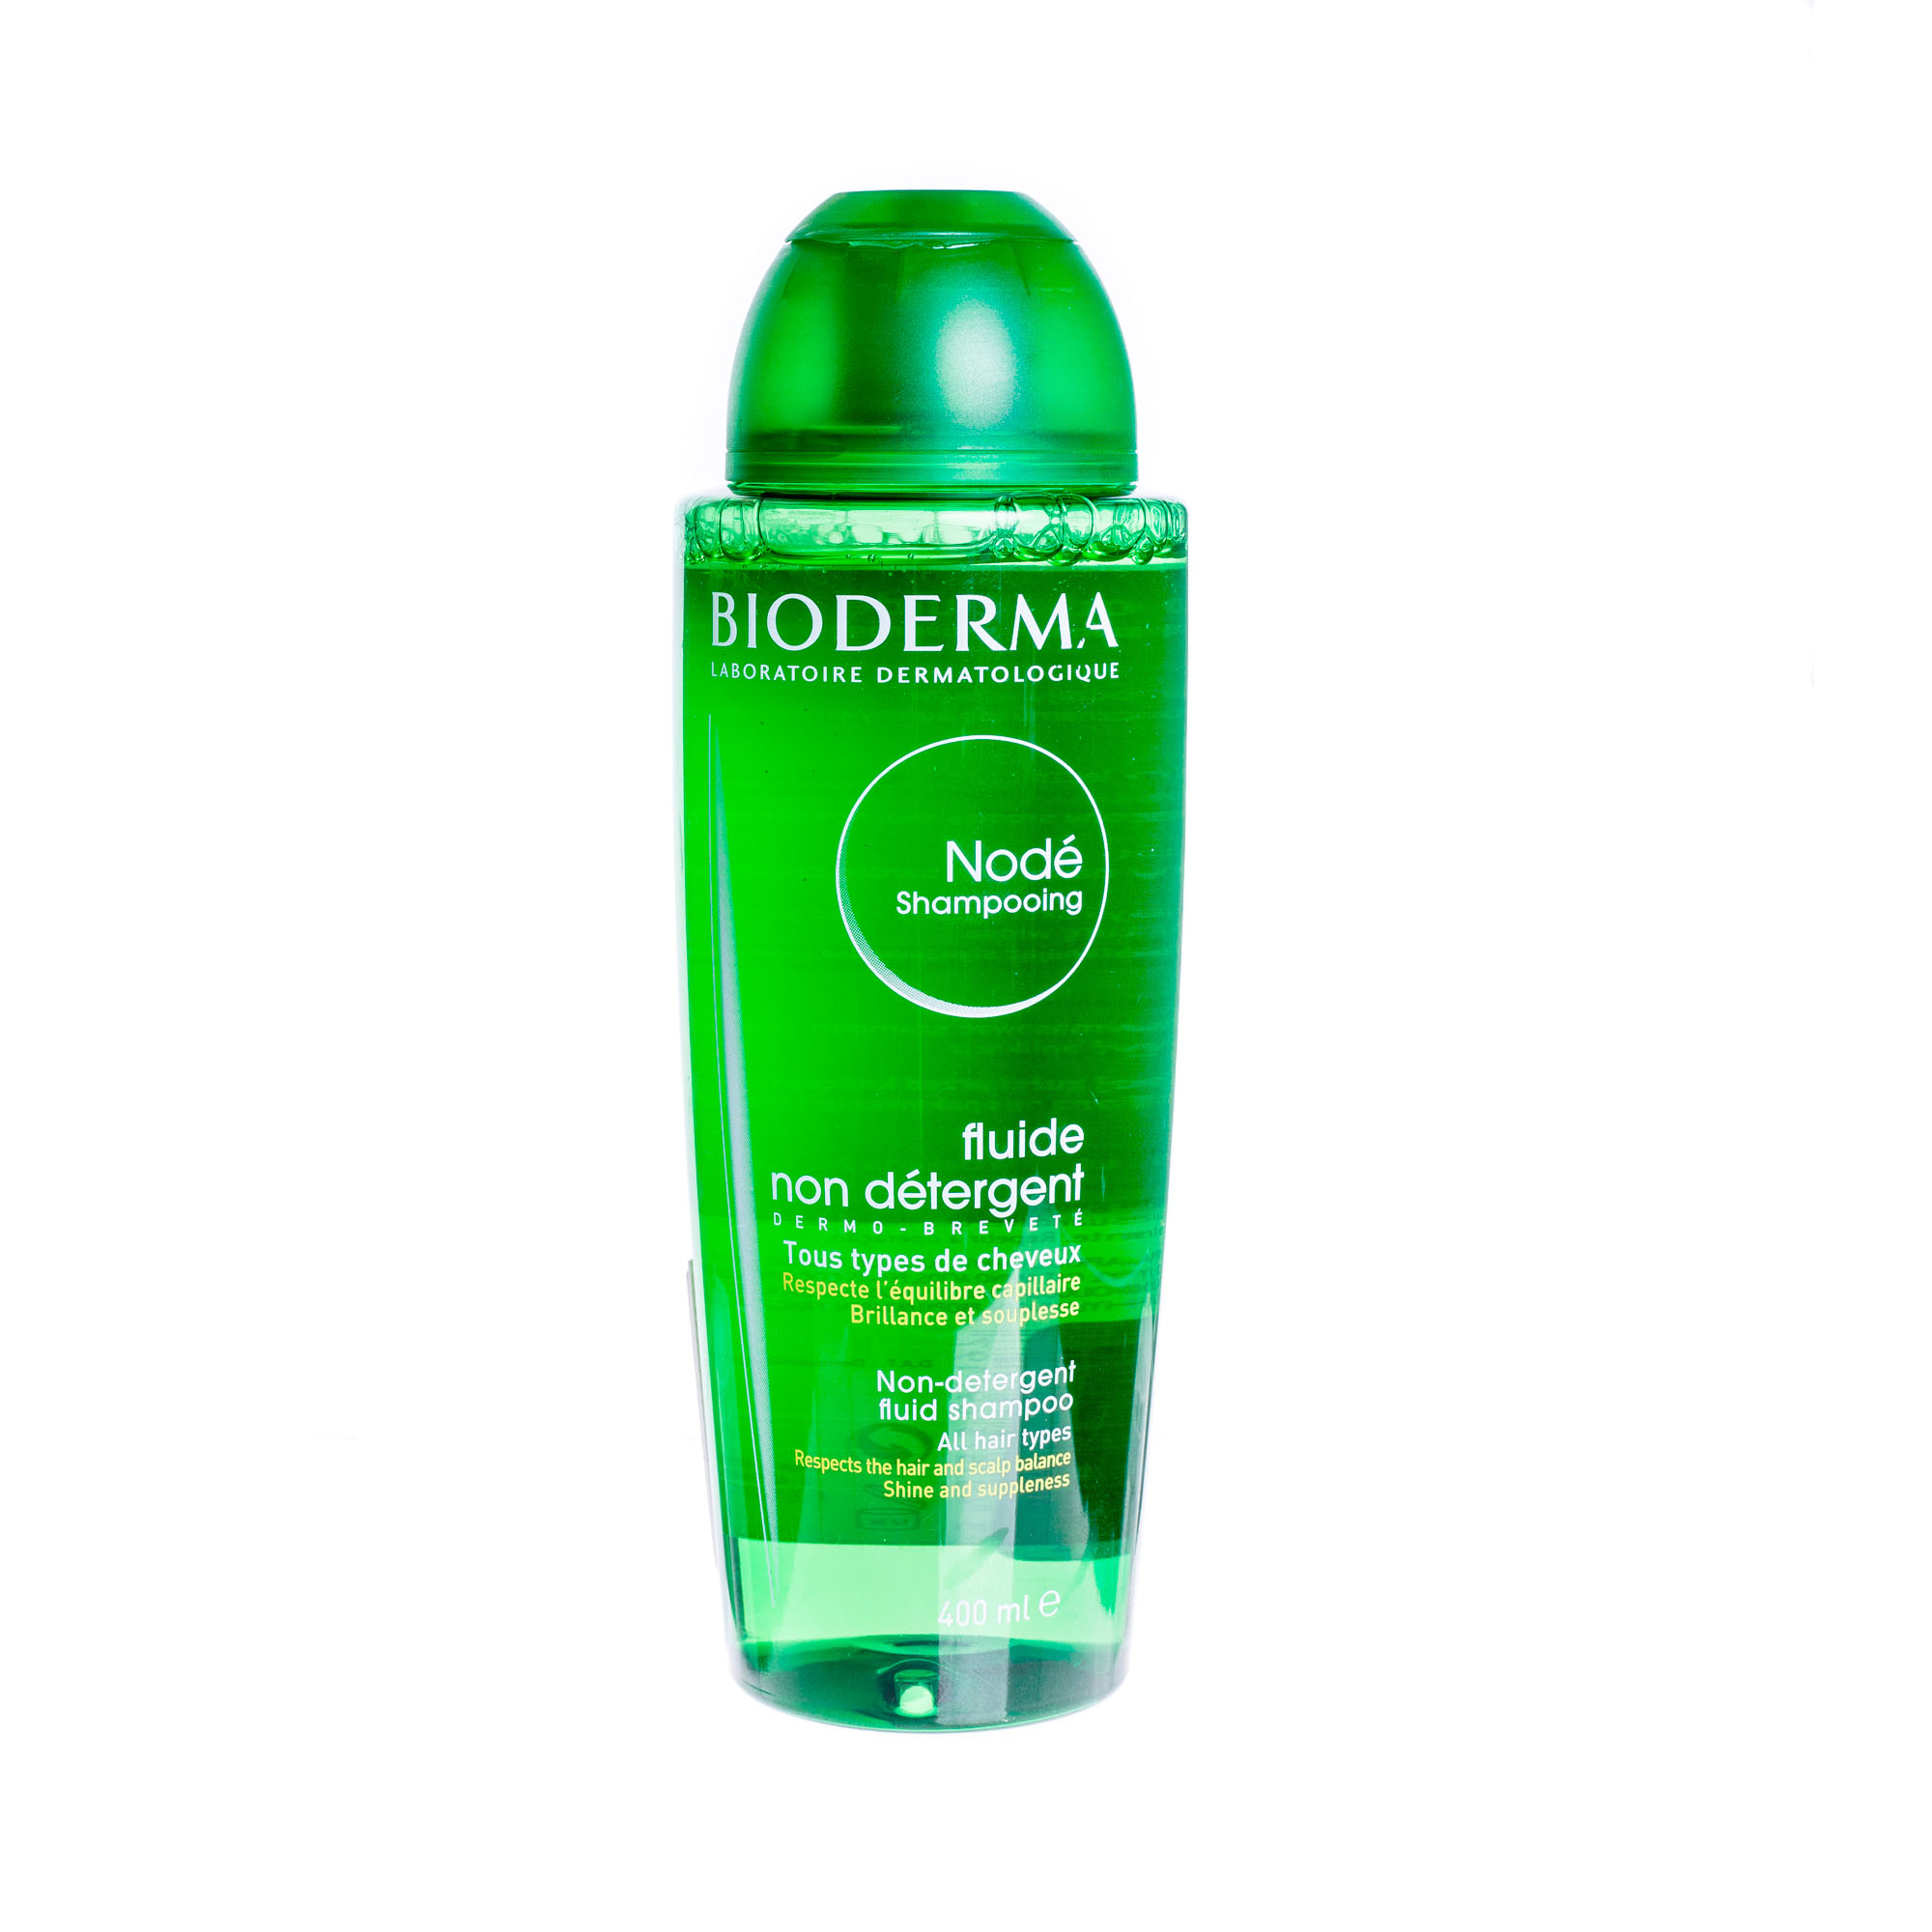 bioderma szampon 400 ml